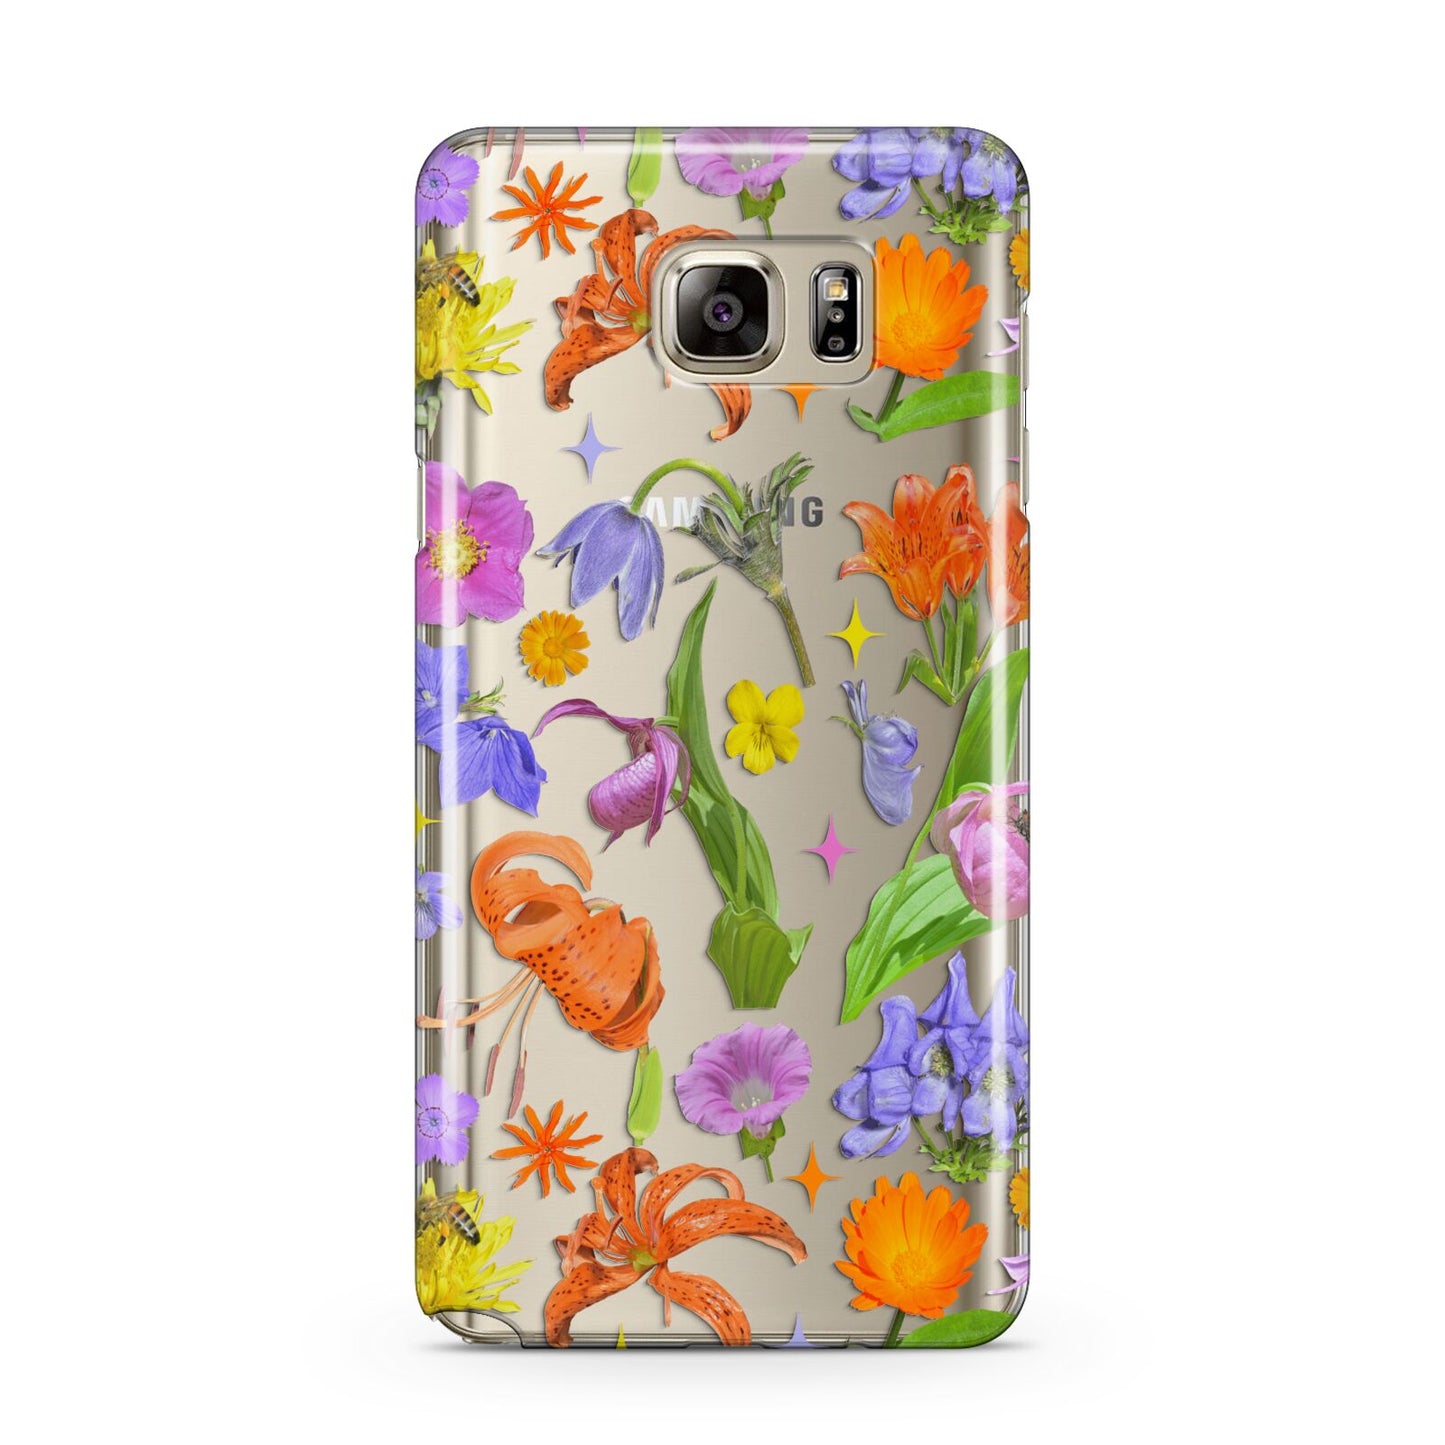 Floral Mix Samsung Galaxy Note 5 Case